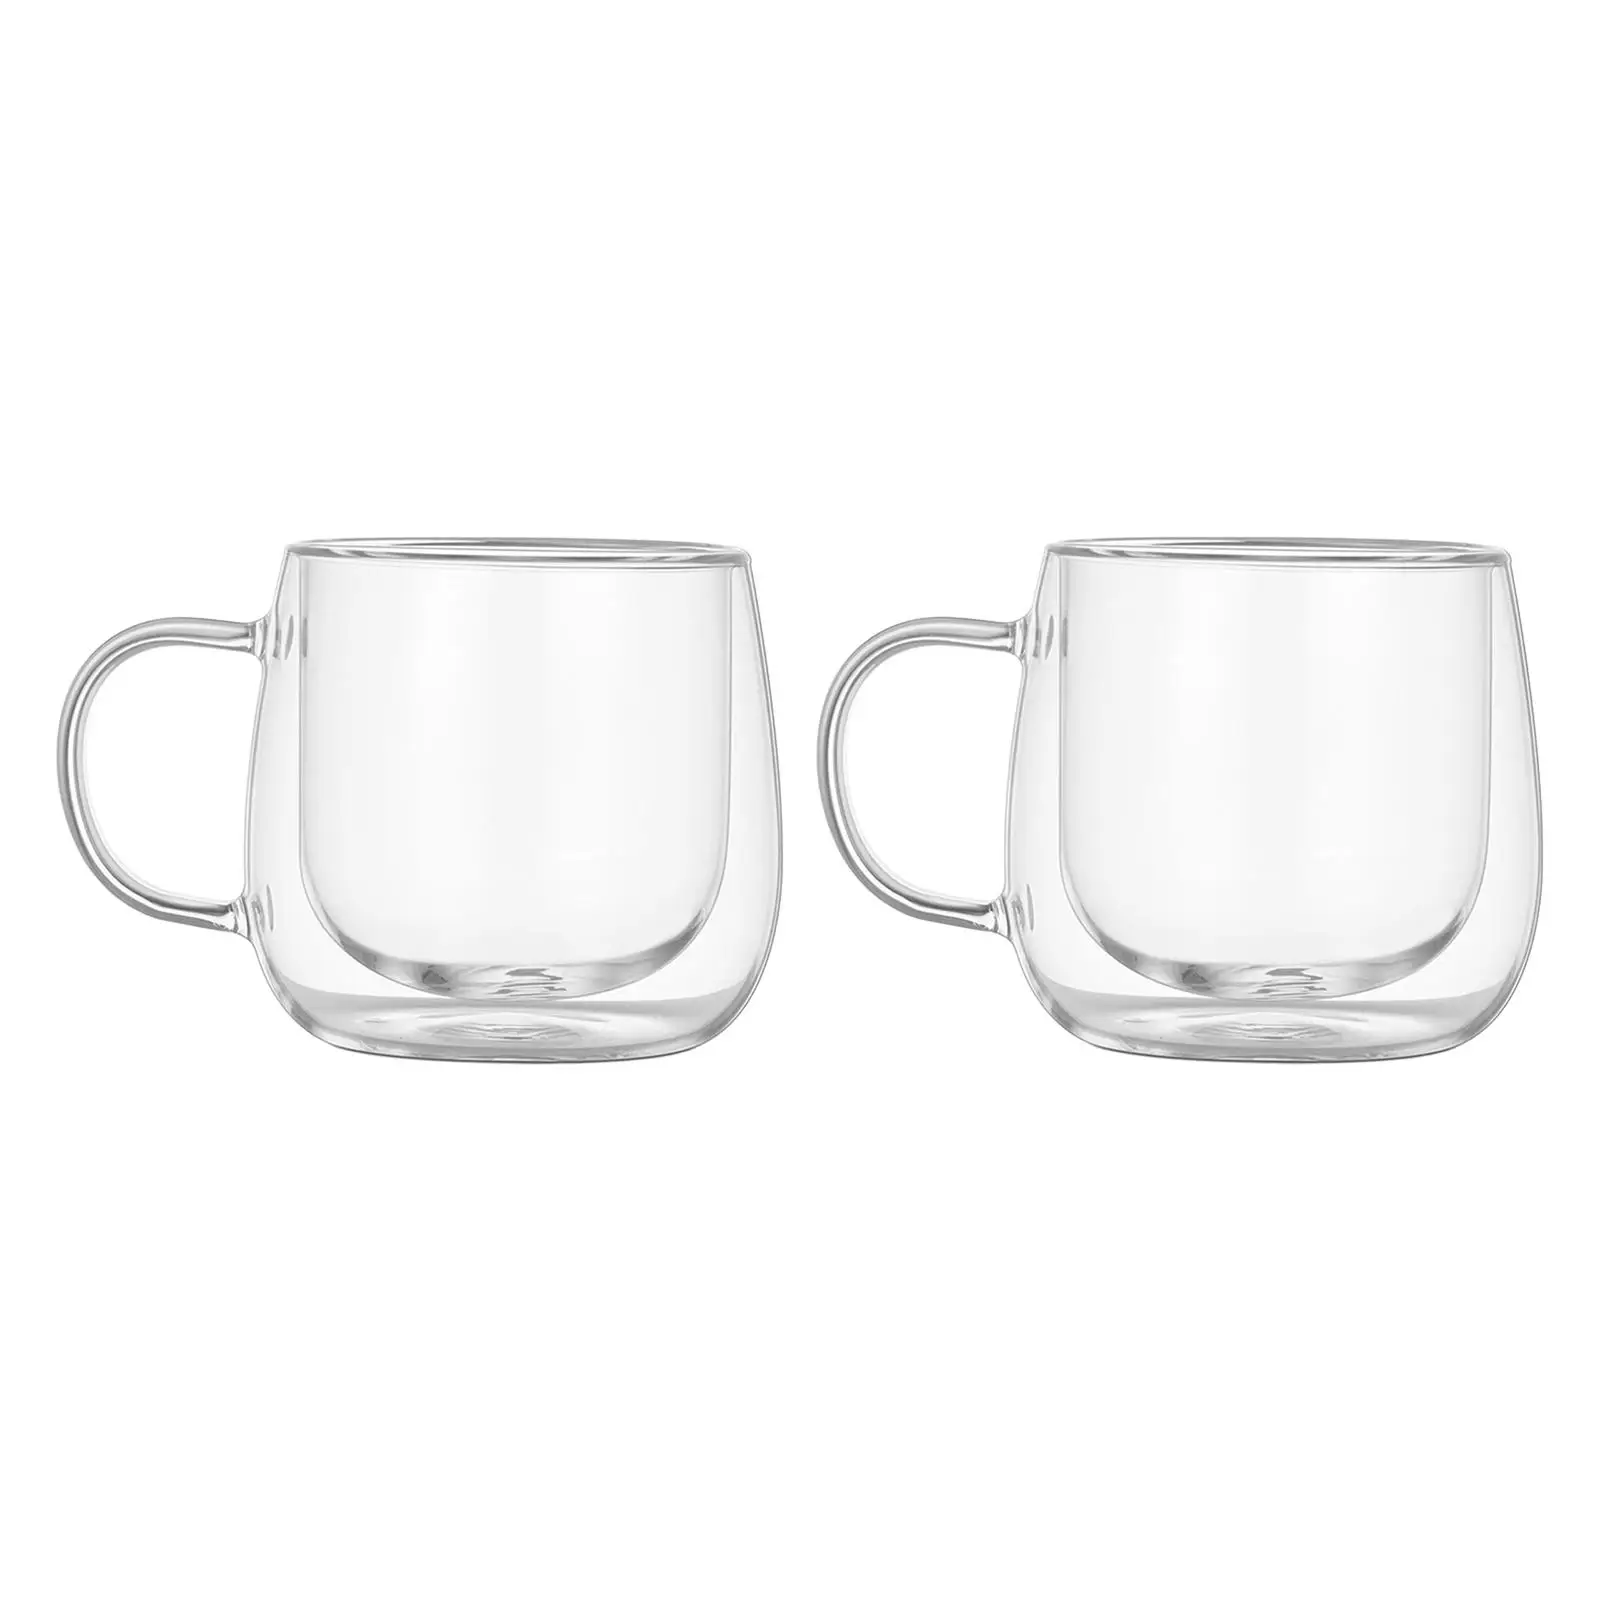 300ml Glass Cup Double Wall Drink Mugs Borosilicate Glass Anti-Scalding Coffee Cup for Teas Ice Cream Hot Coffee